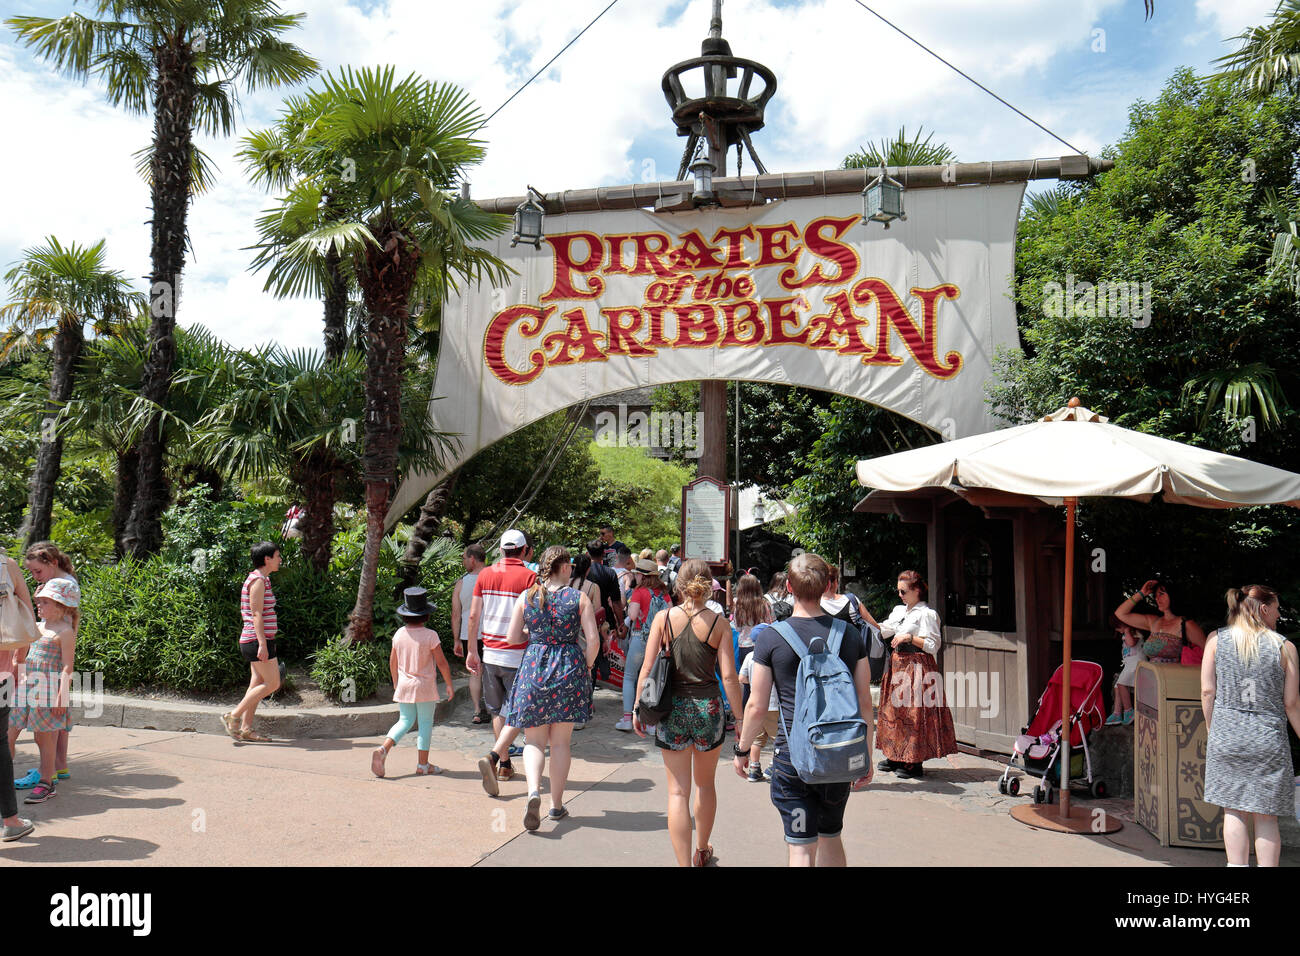 Entrance to the Pirates of the Caribbean ride in Disneyland Paris, Marne-la-Vallée, near Paris, France. Stock Photo